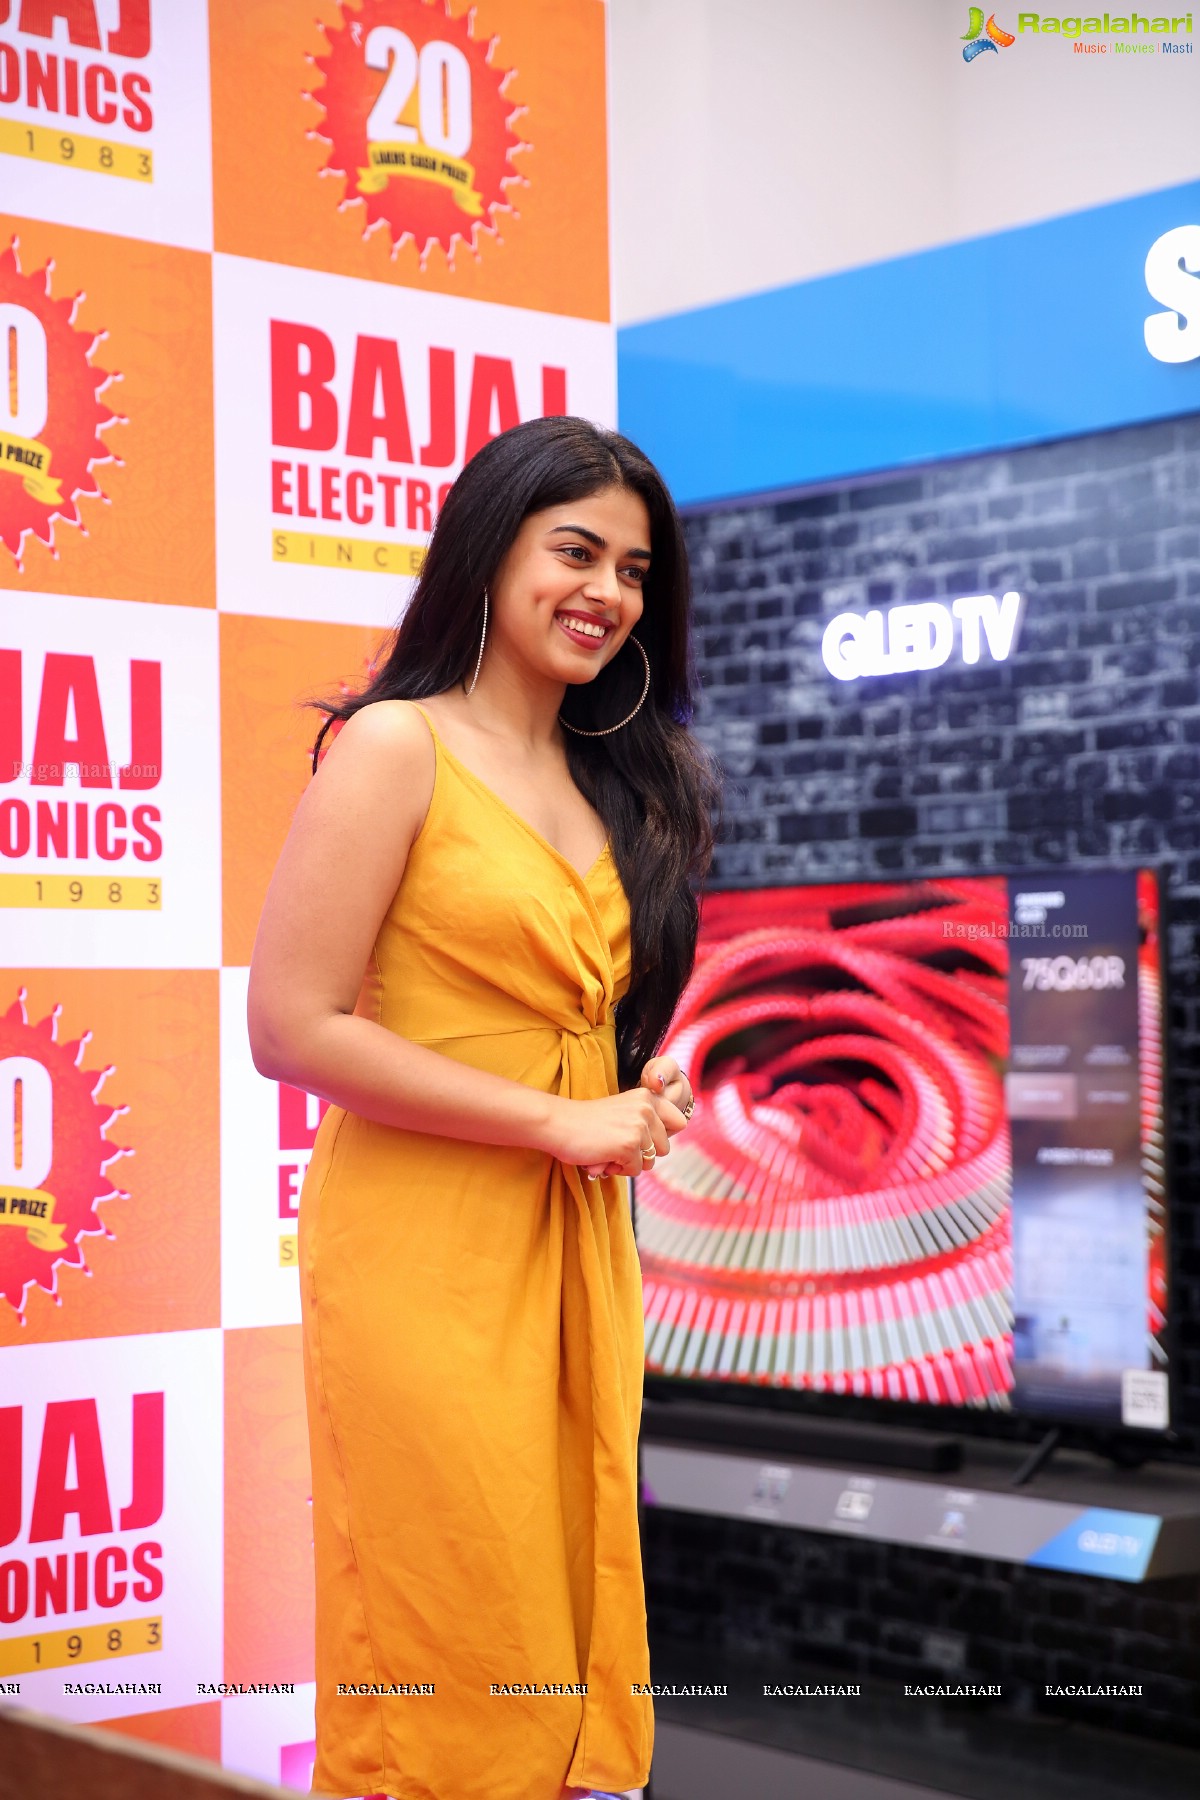 Bajaj Electronics Announces 20 Lakh Cash Draw Winner at Forum Sujana Mall